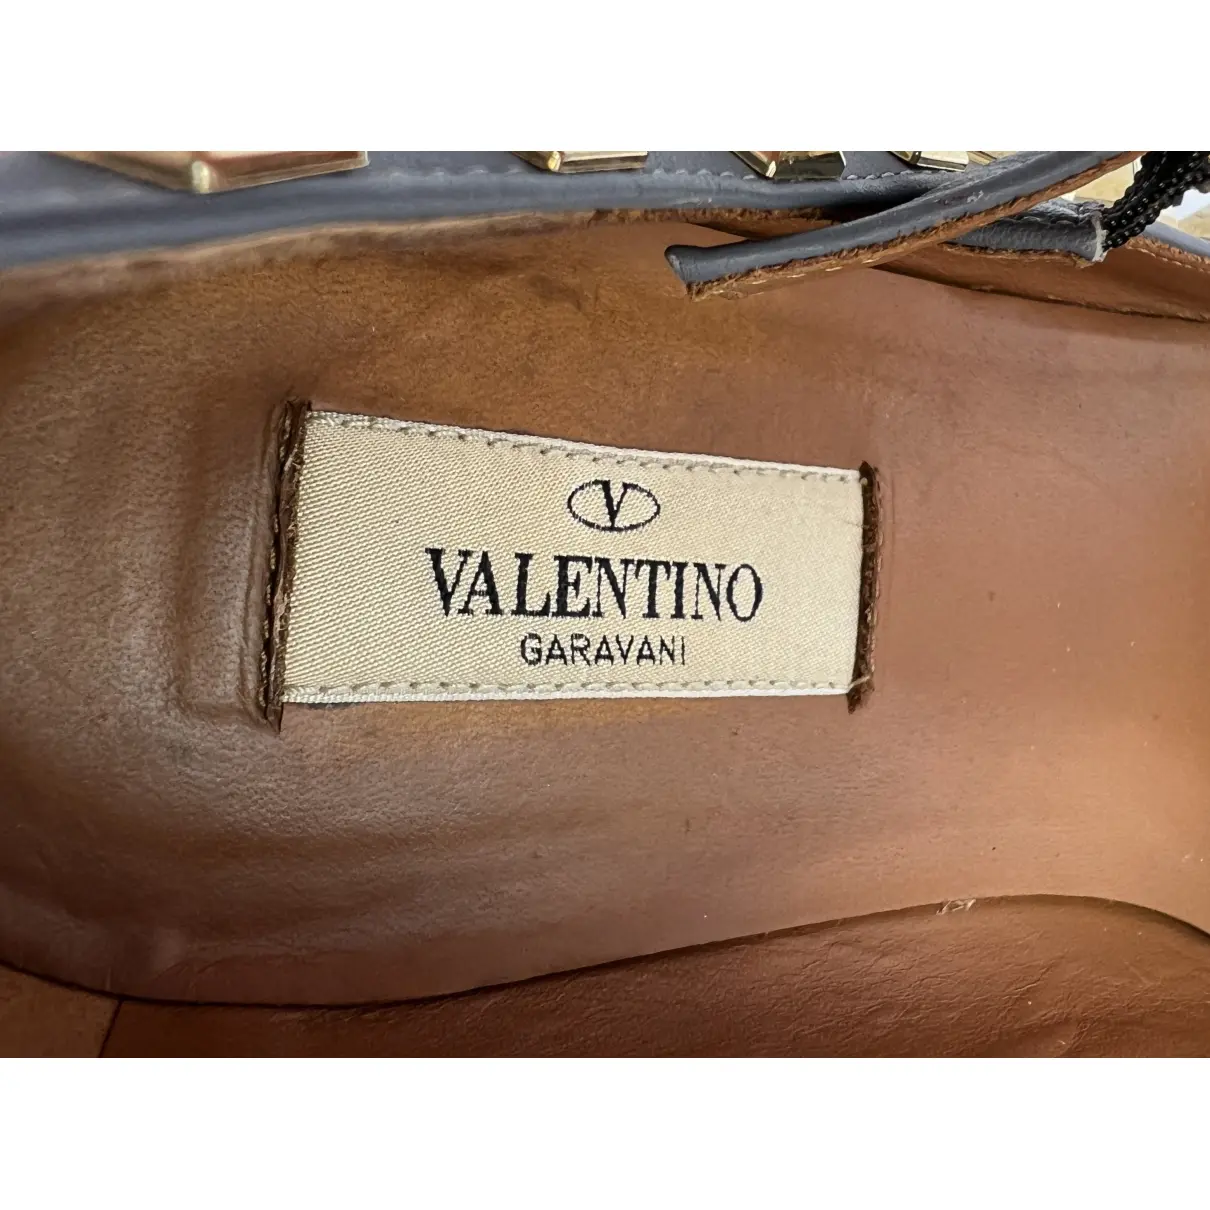 Leather ballet flats Valentino Garavani